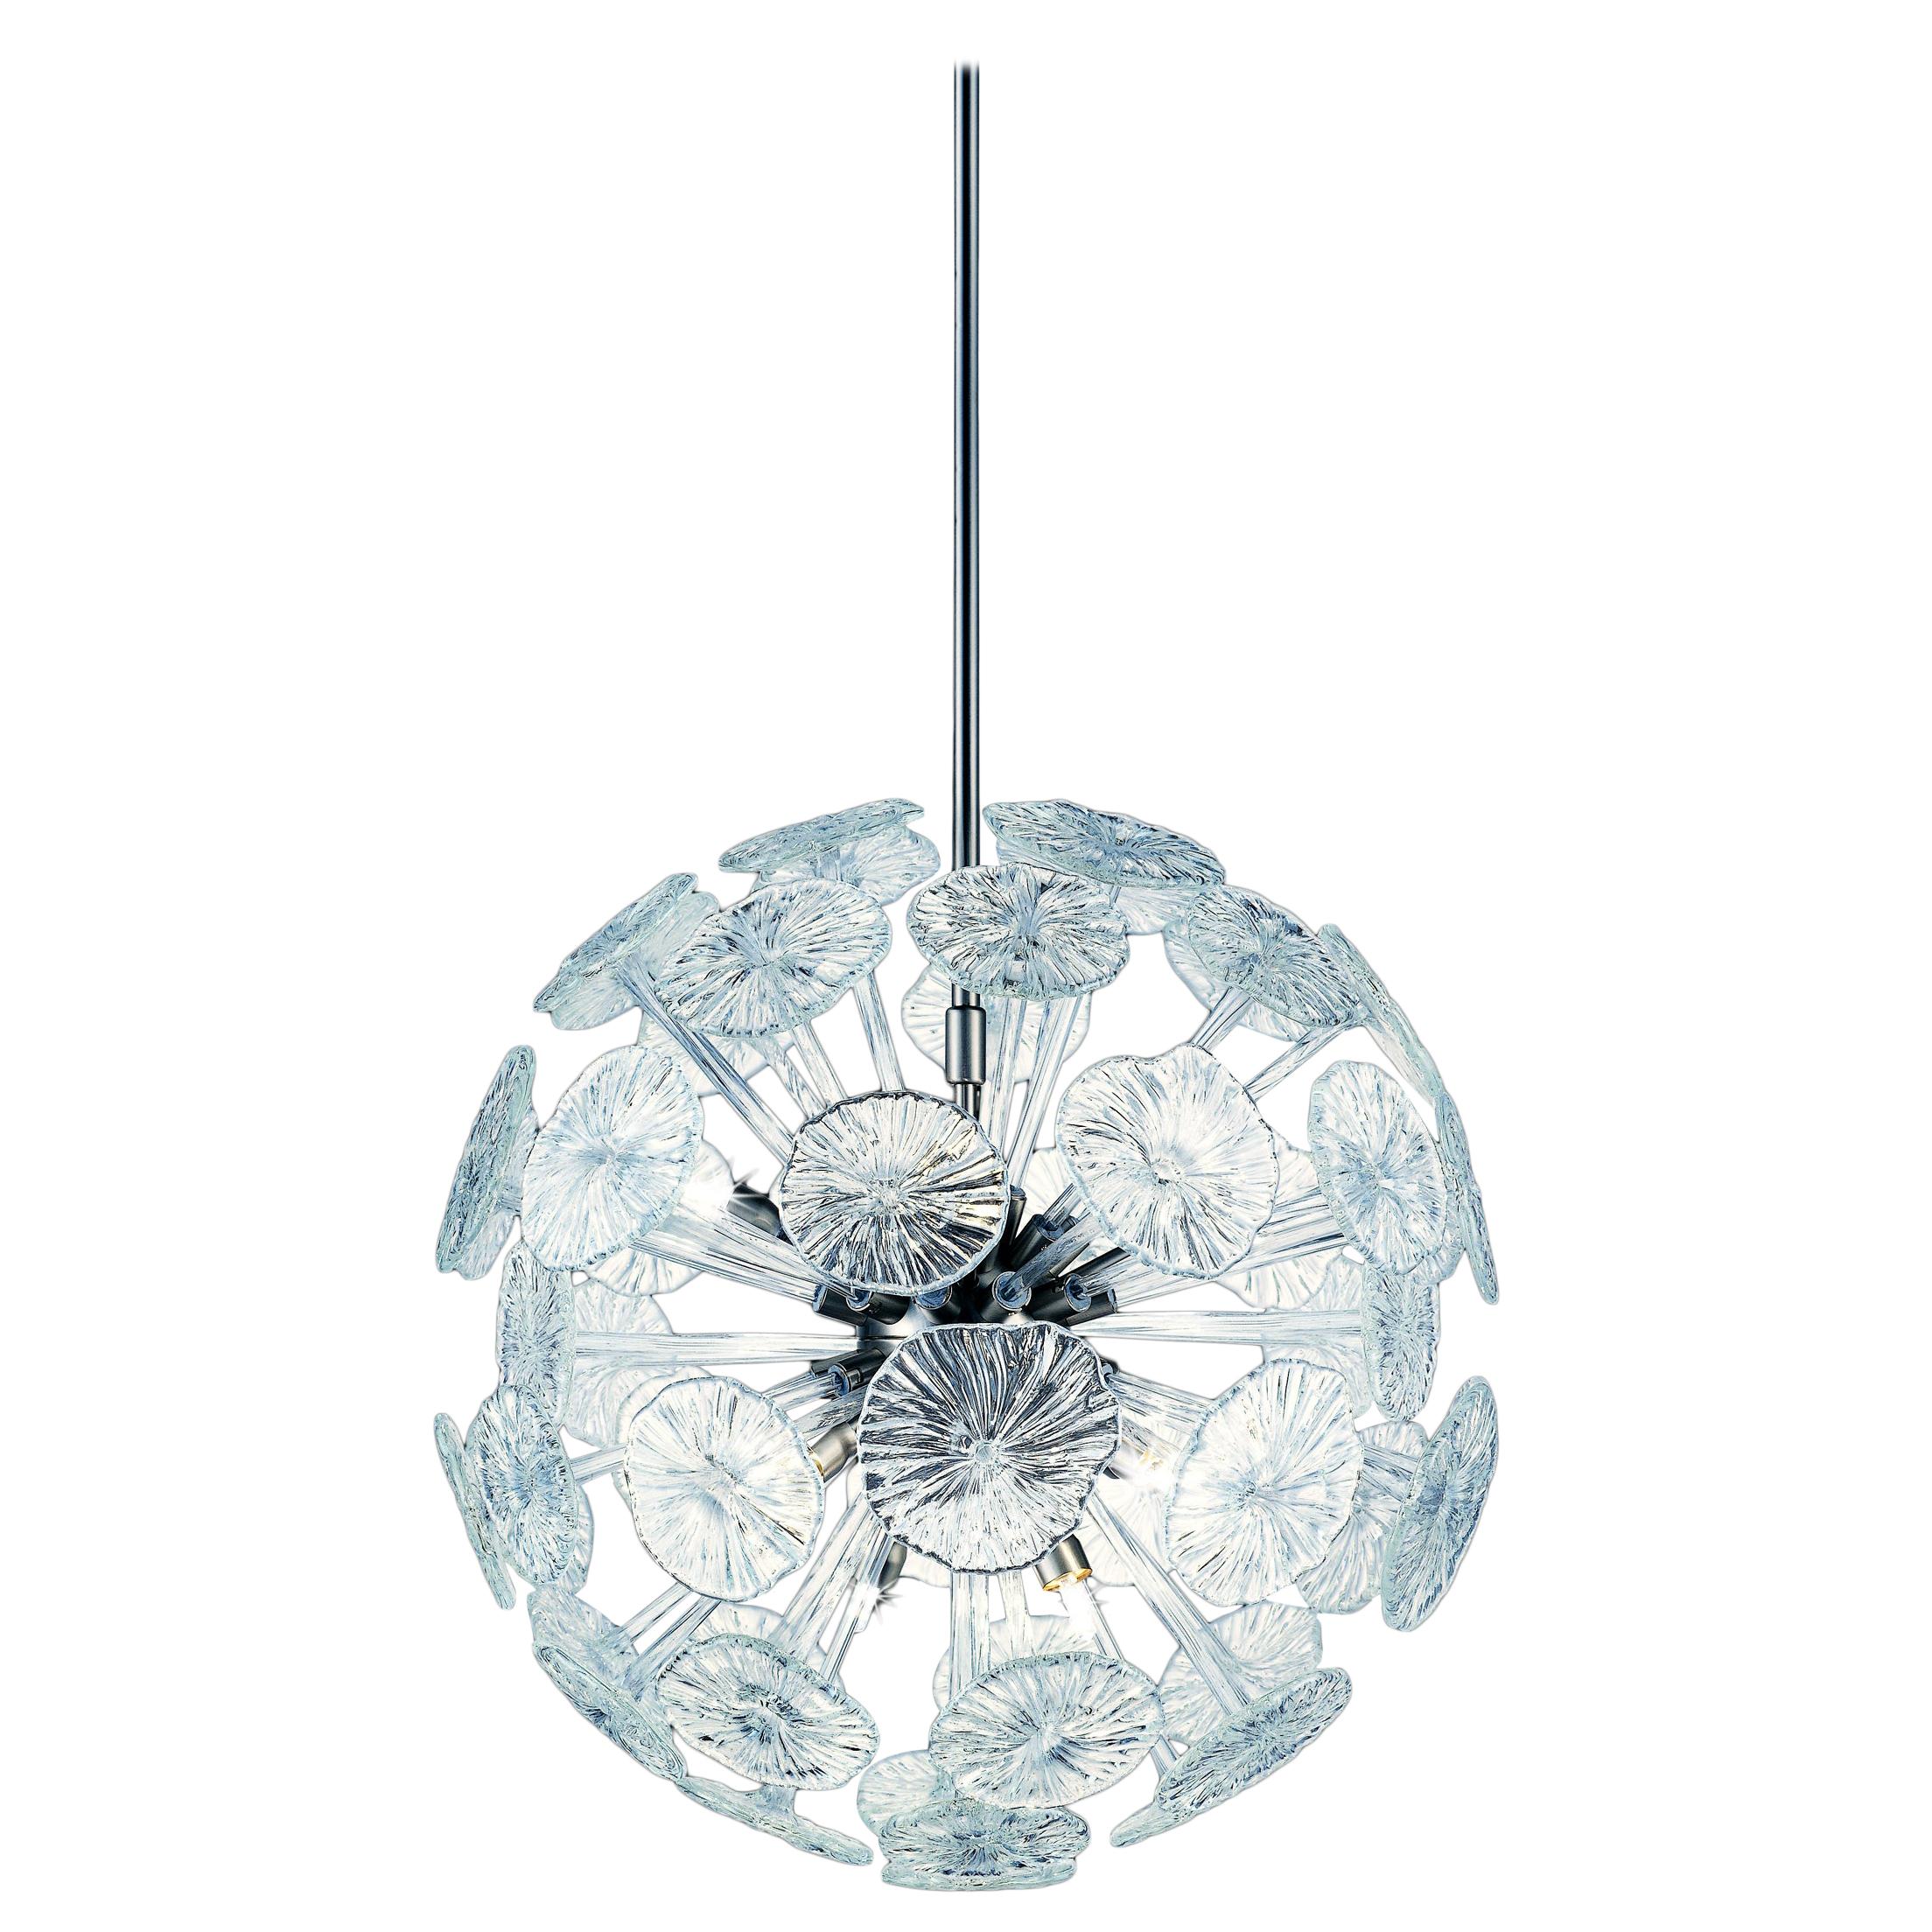 Artistic Blown Handmade Murano Glass Chandelier Planet by La Murrina For Sale